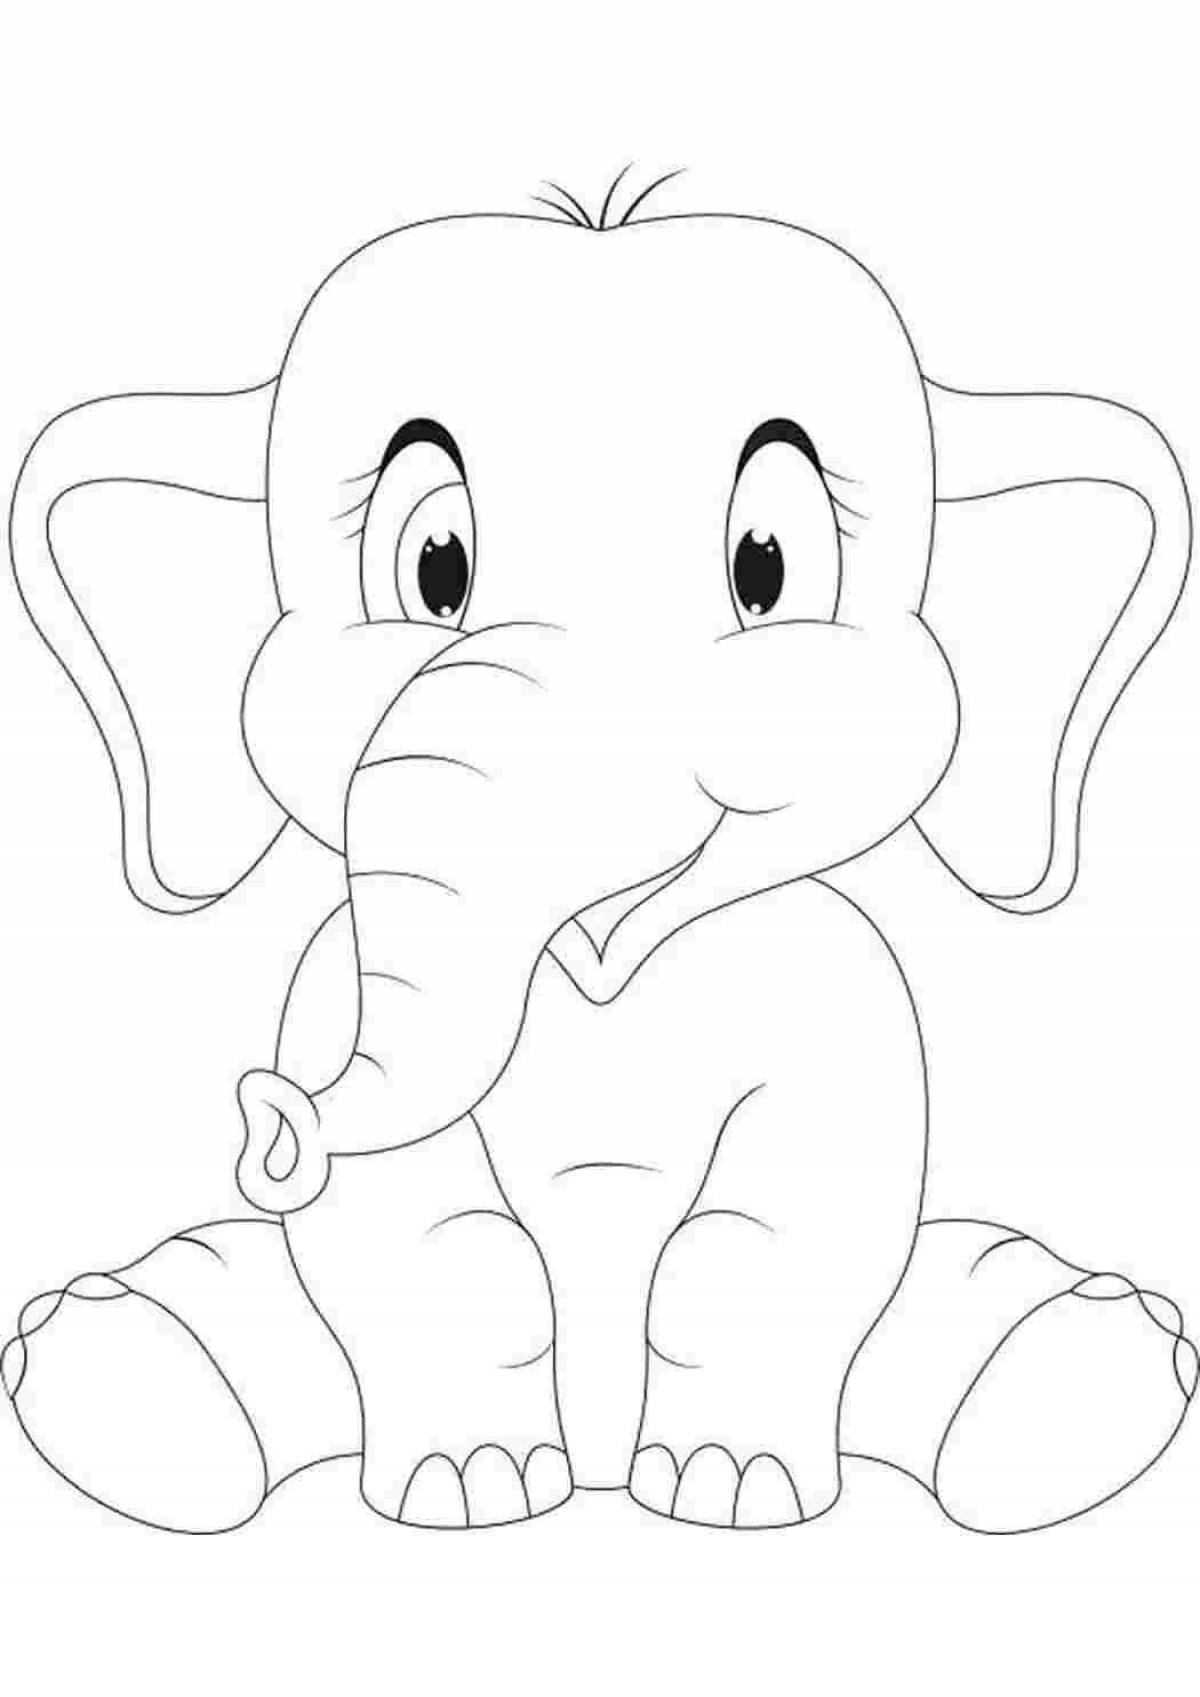 Fancy elephant coloring